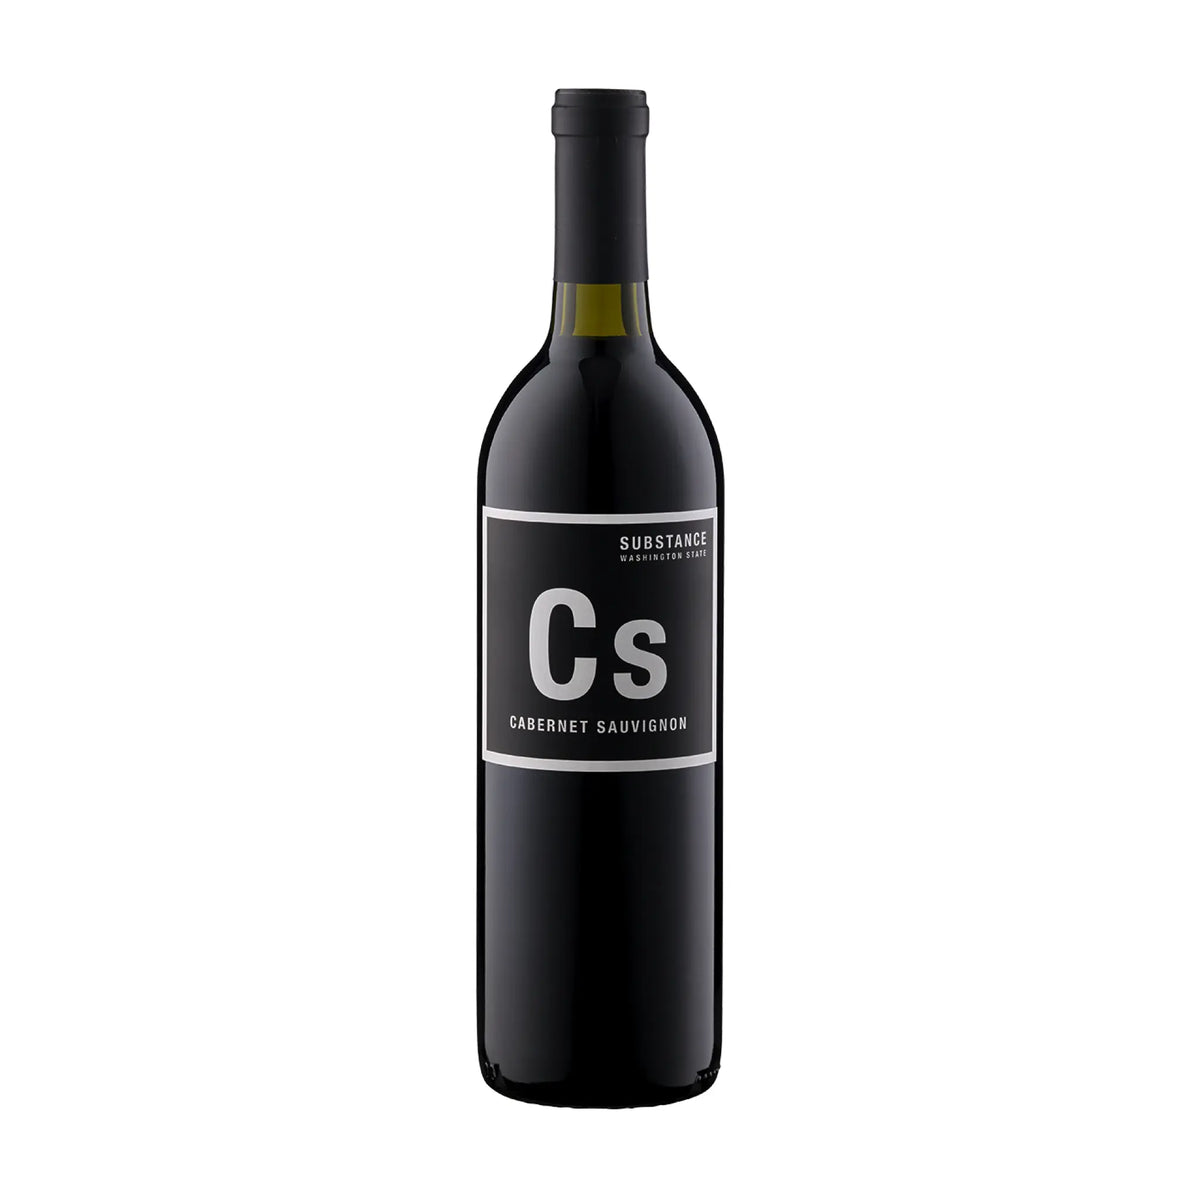 Wines of substance-Rotwein-Cabernet Sauvignon-USA-Washington-2019 Substance 'Cs' Cabernet Sauvignon-WINECOM